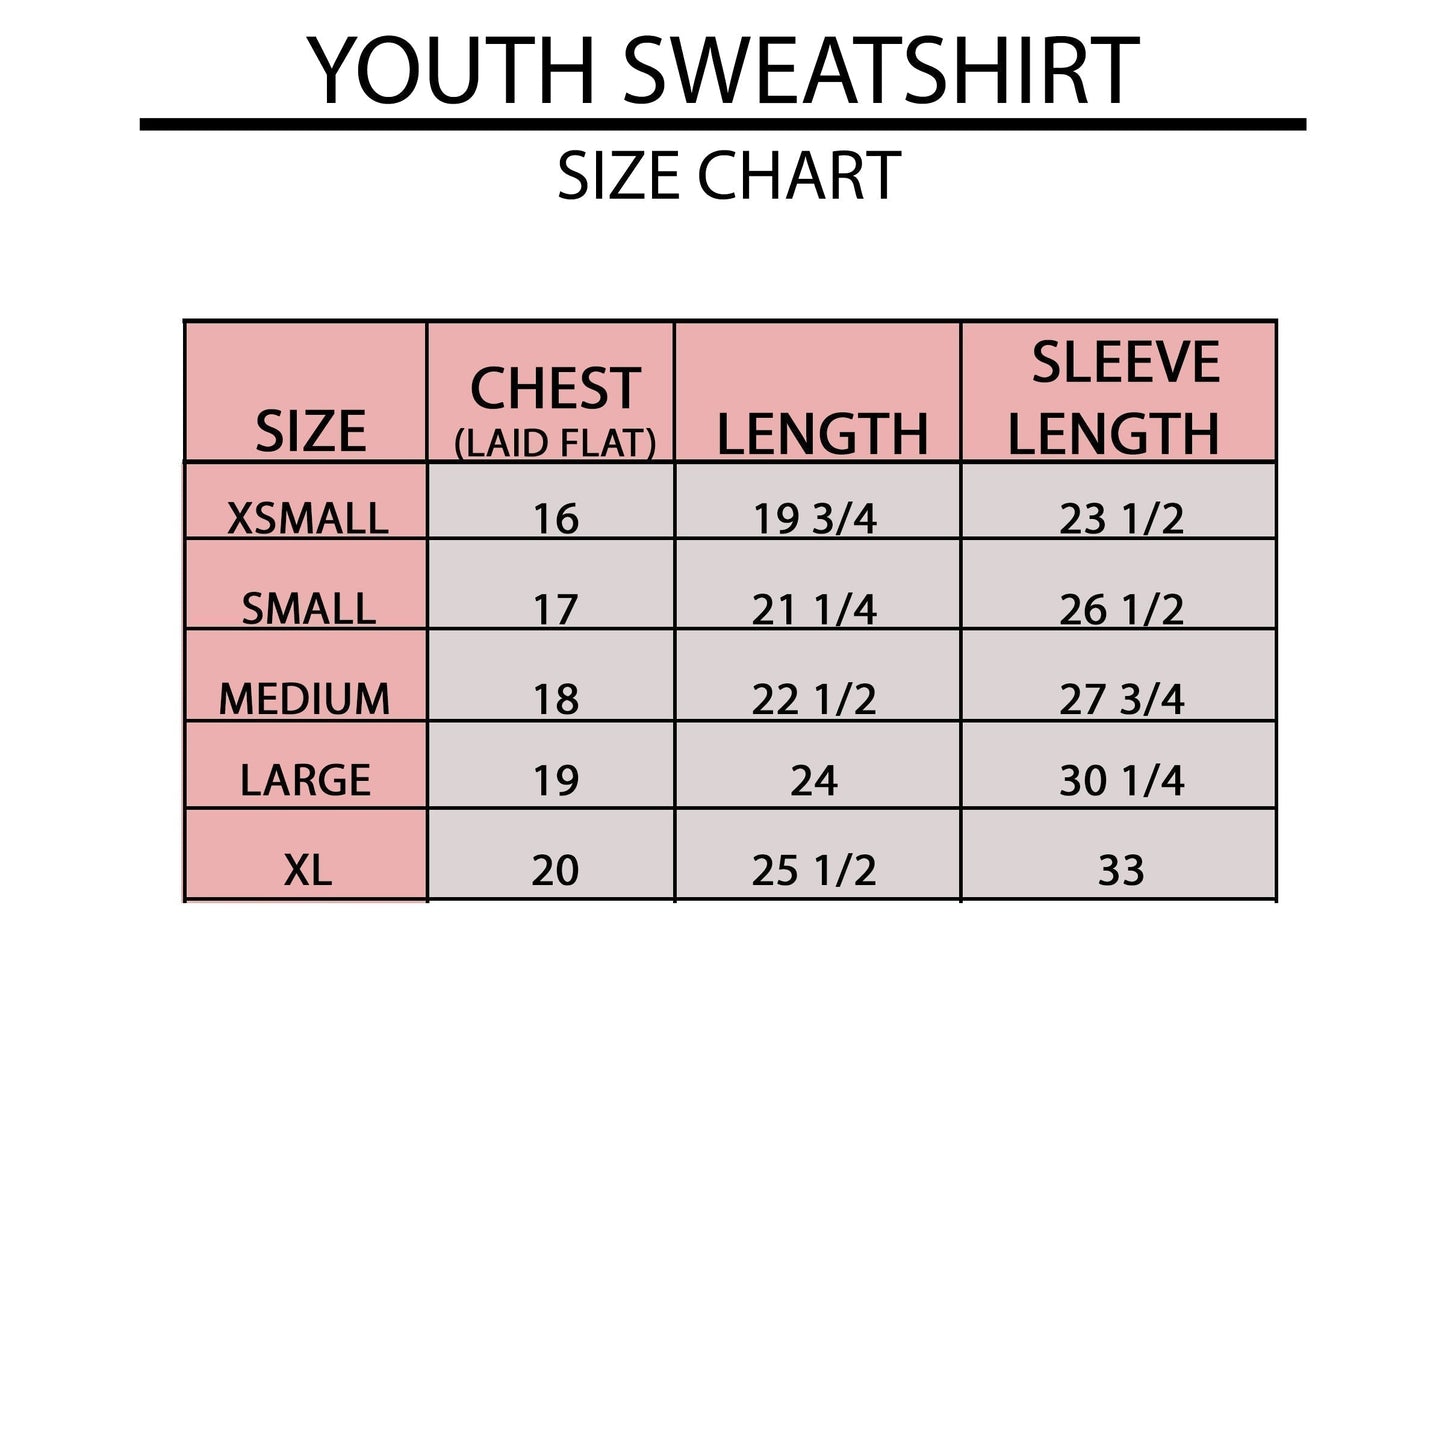 Spooky Babe Wavy | Youth Sweatshirt